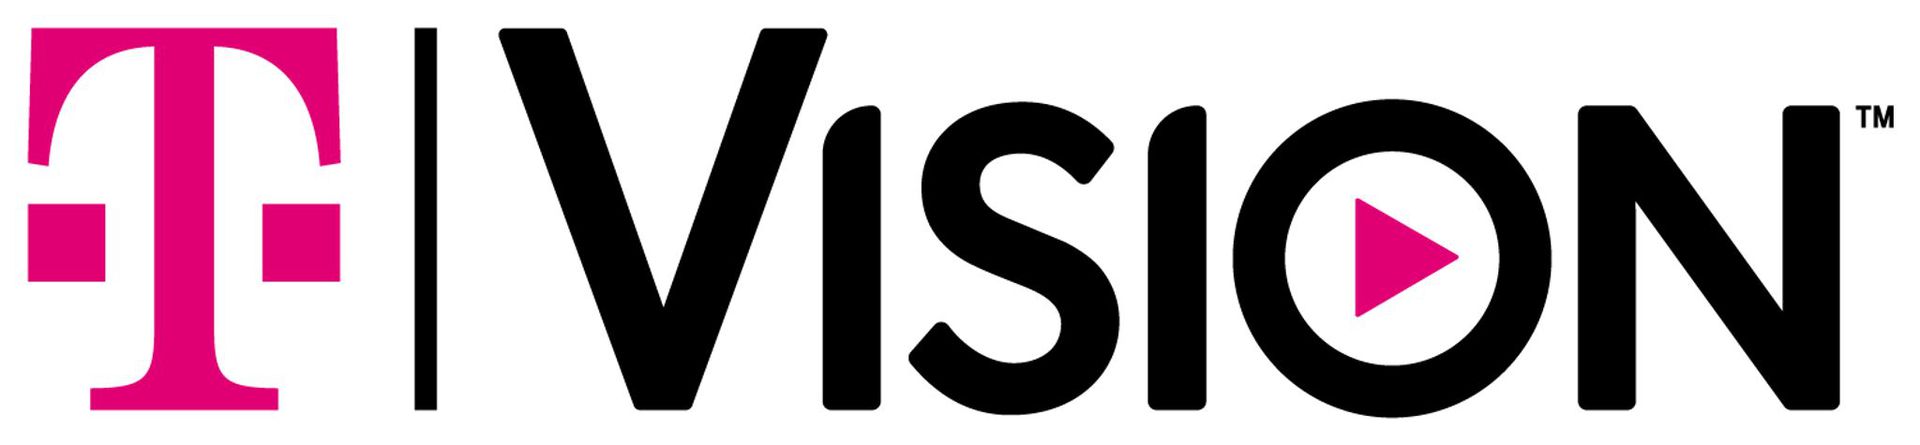 tvision logo